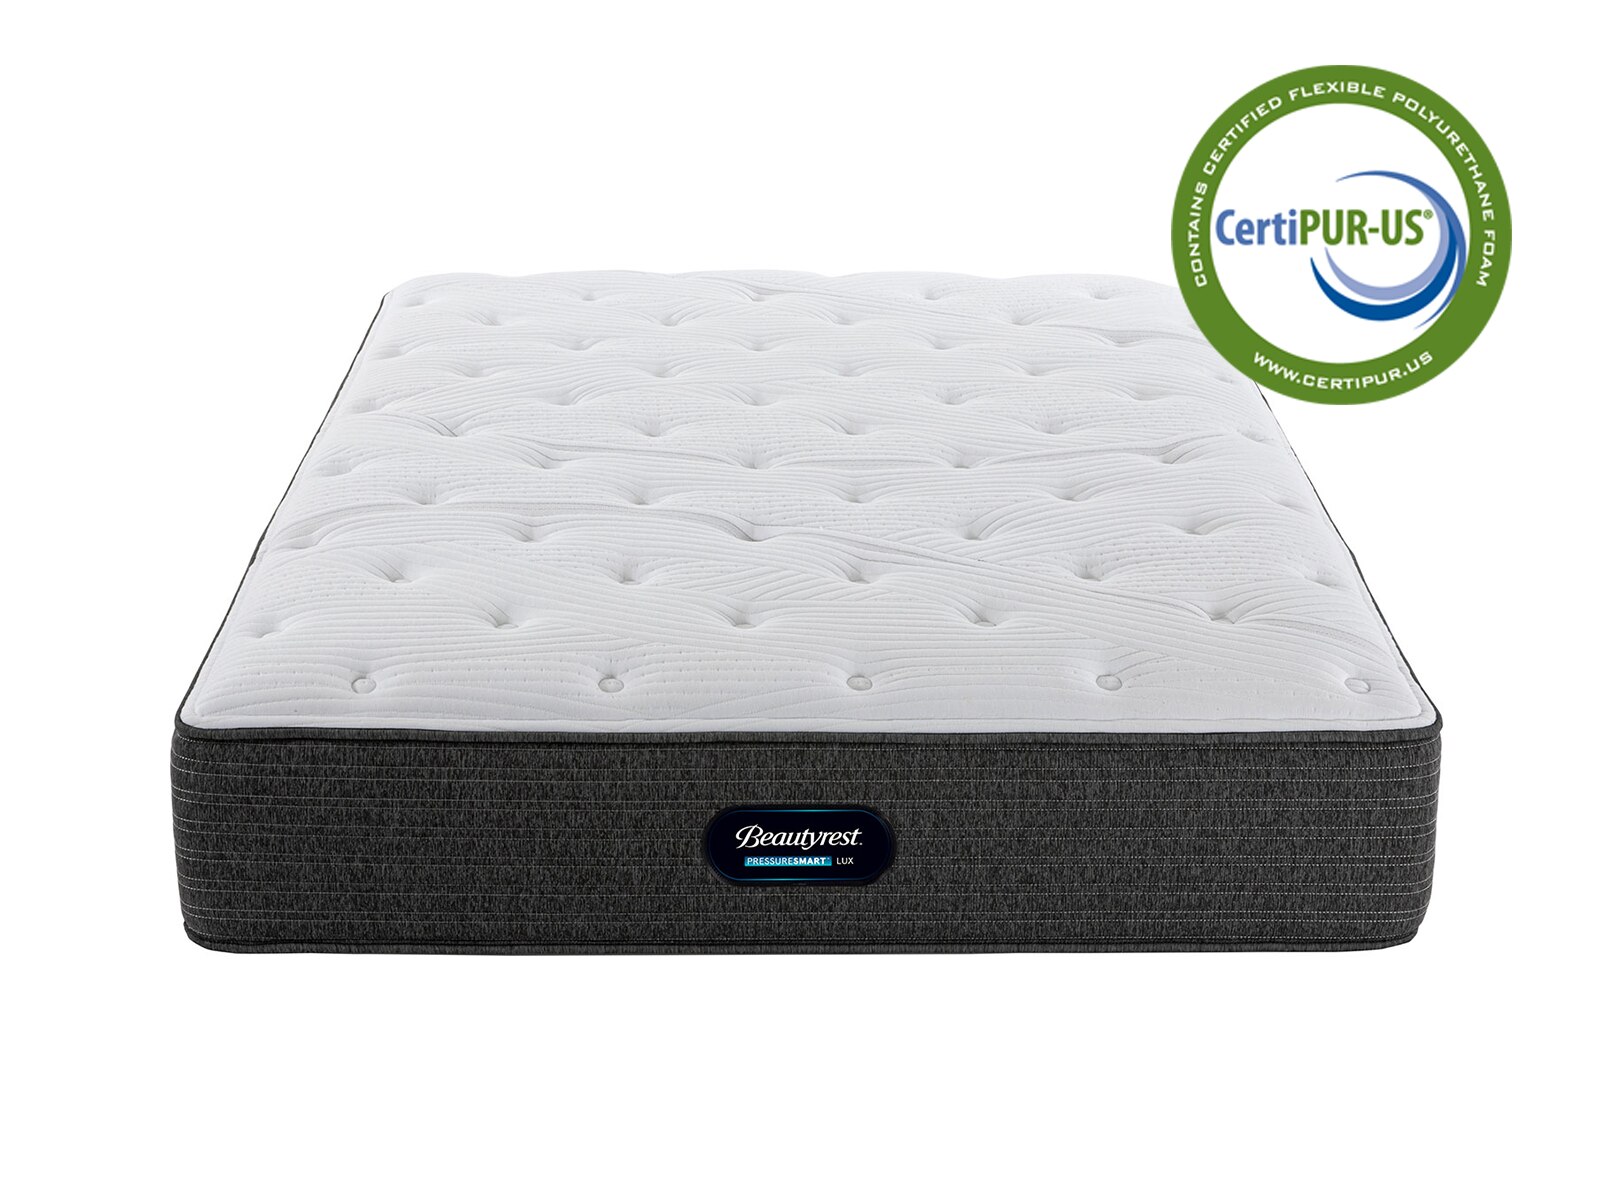 beautyrest pressuresmart lux 13 inch plush mattress reviews